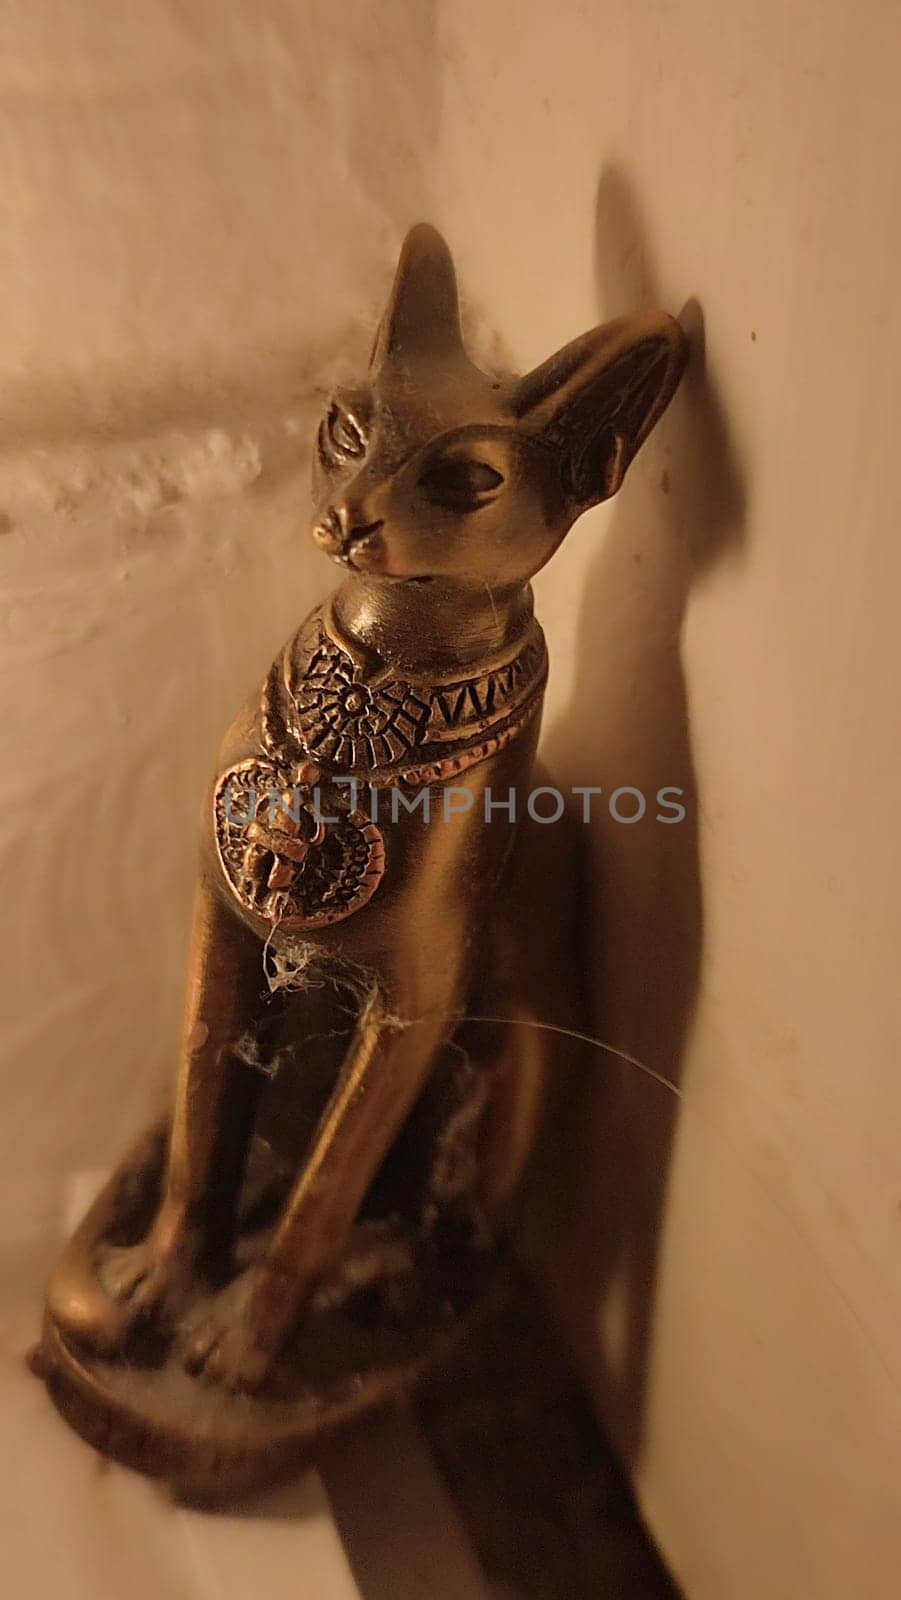 Egyptian cat, figurine symbol religion faith animal. High quality photo